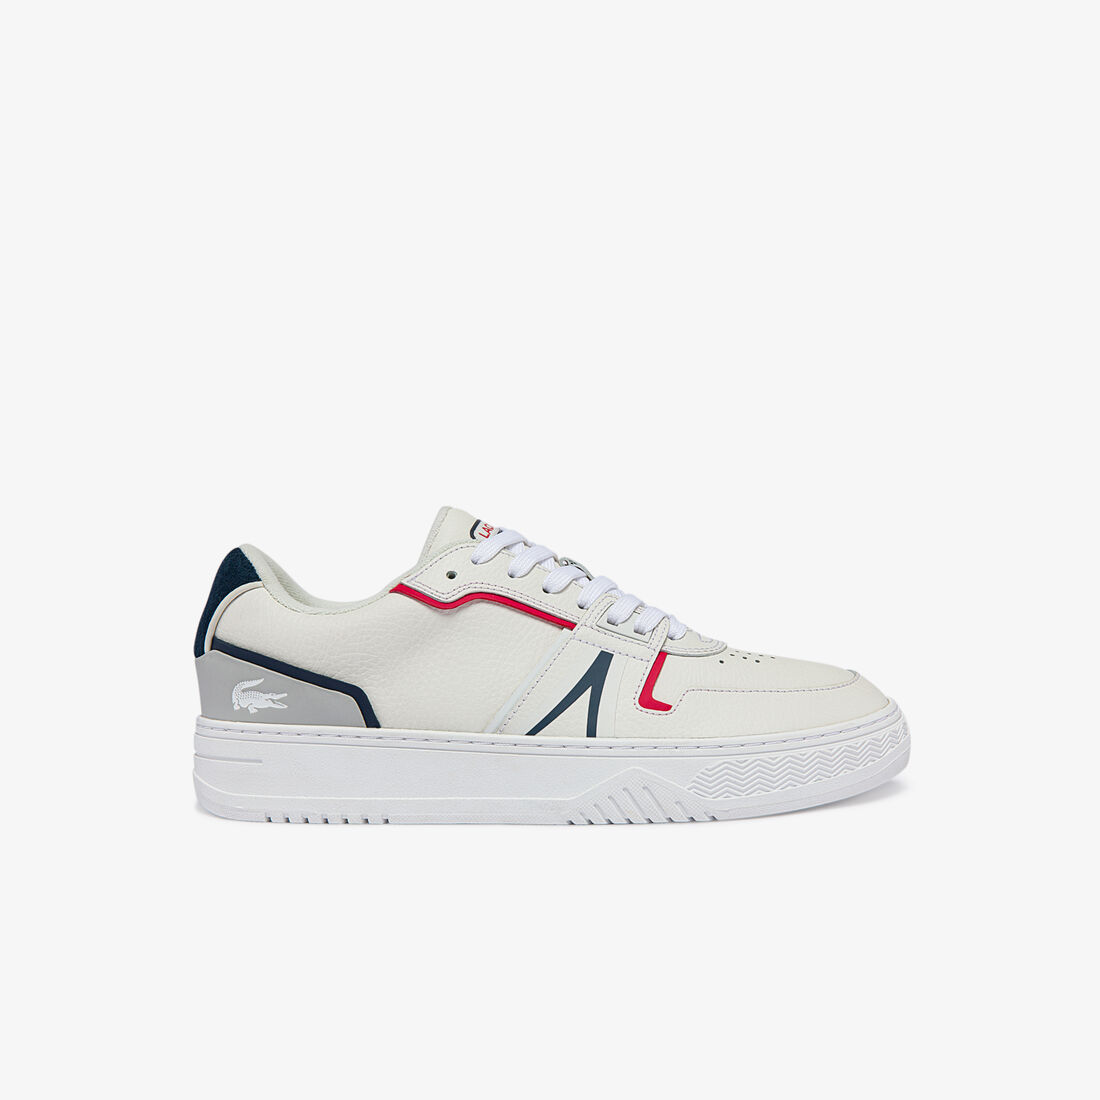 Lacoste L001 Leder Sneakers Herren Weiß Navy Rot | SHFX-18420